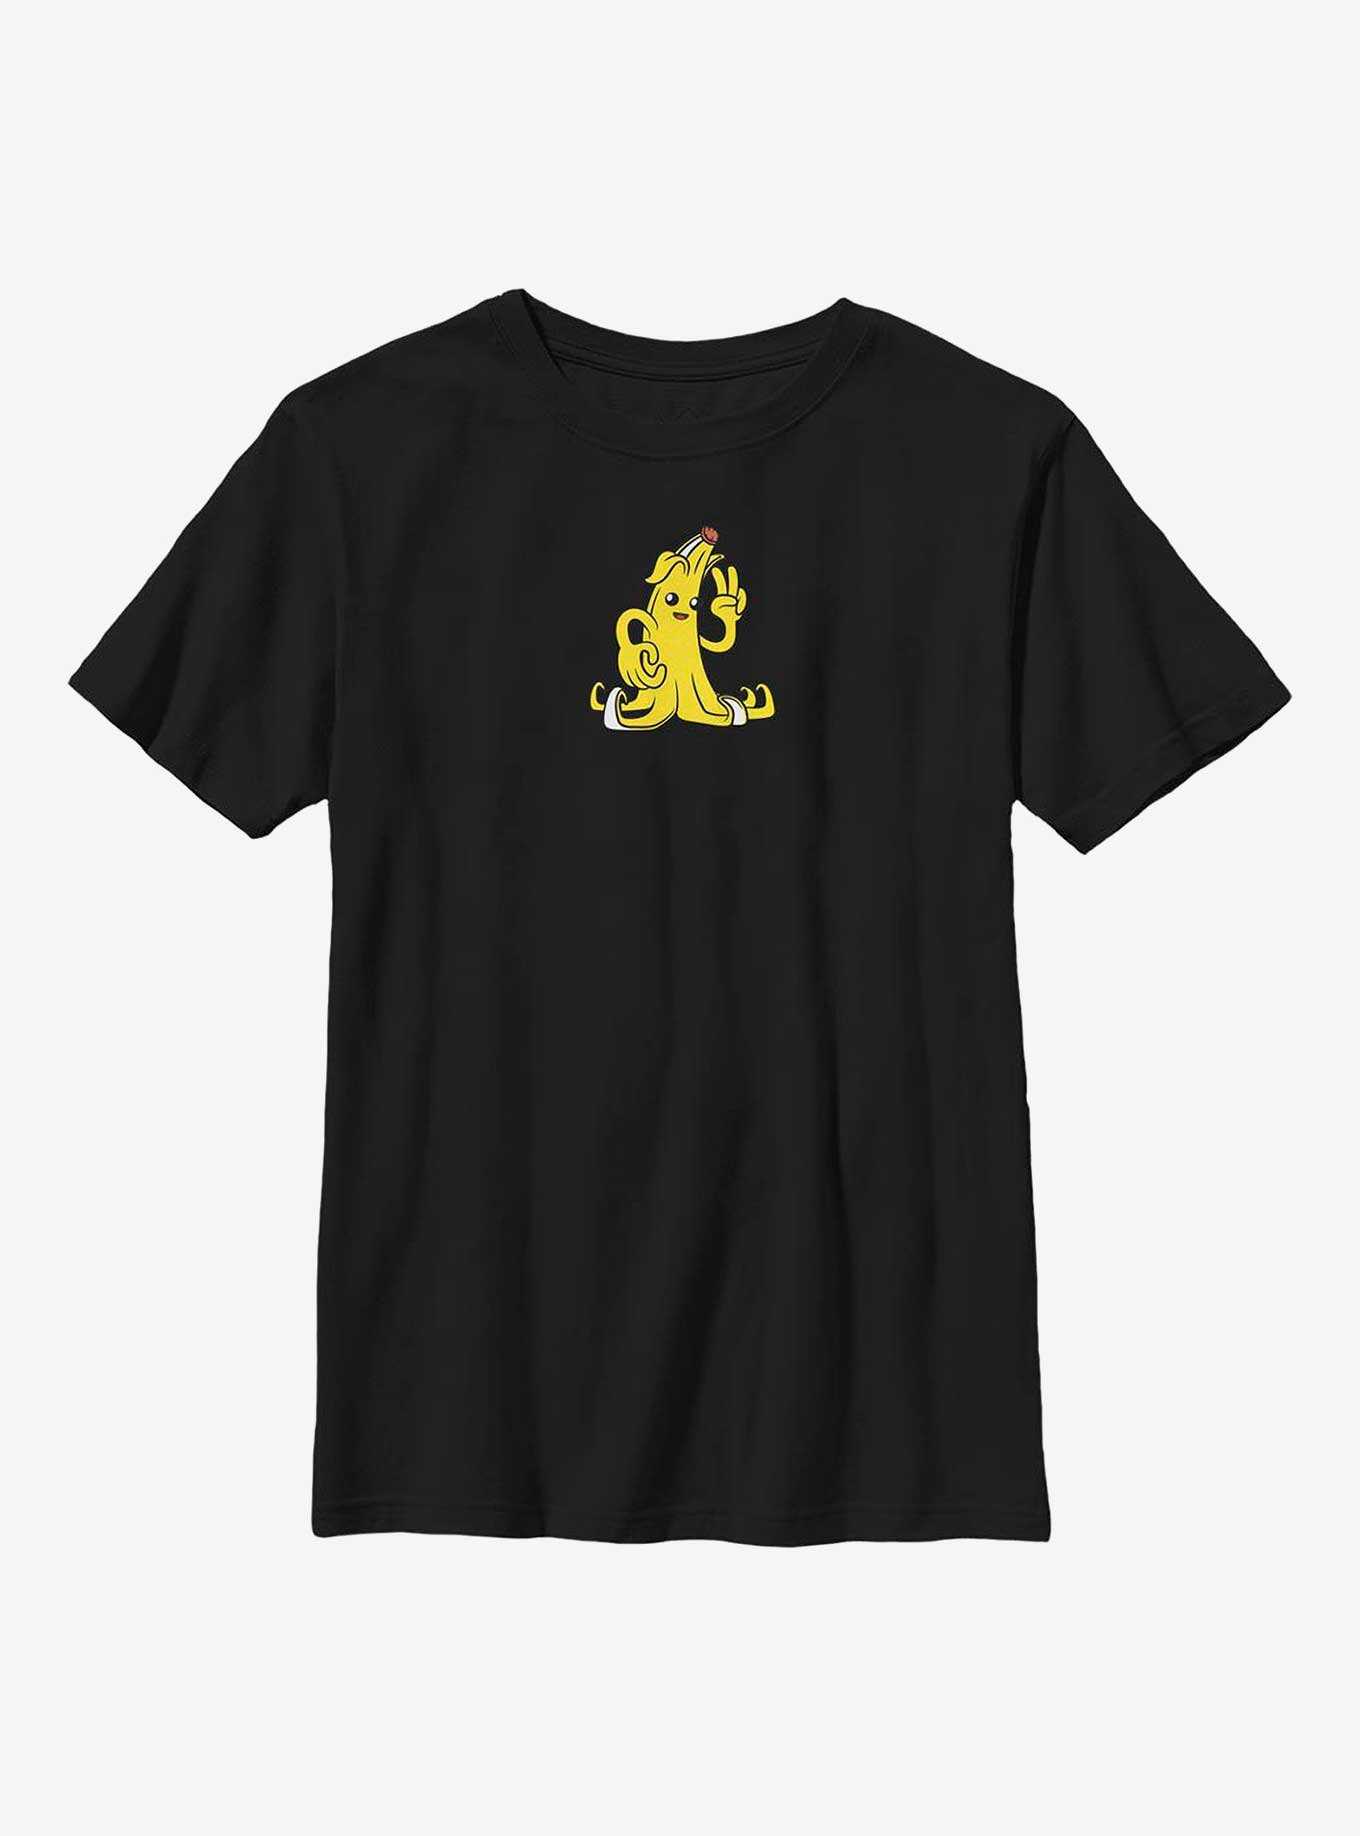 Fortnite Peely Banana Peace Youth T-Shirt, , hi-res